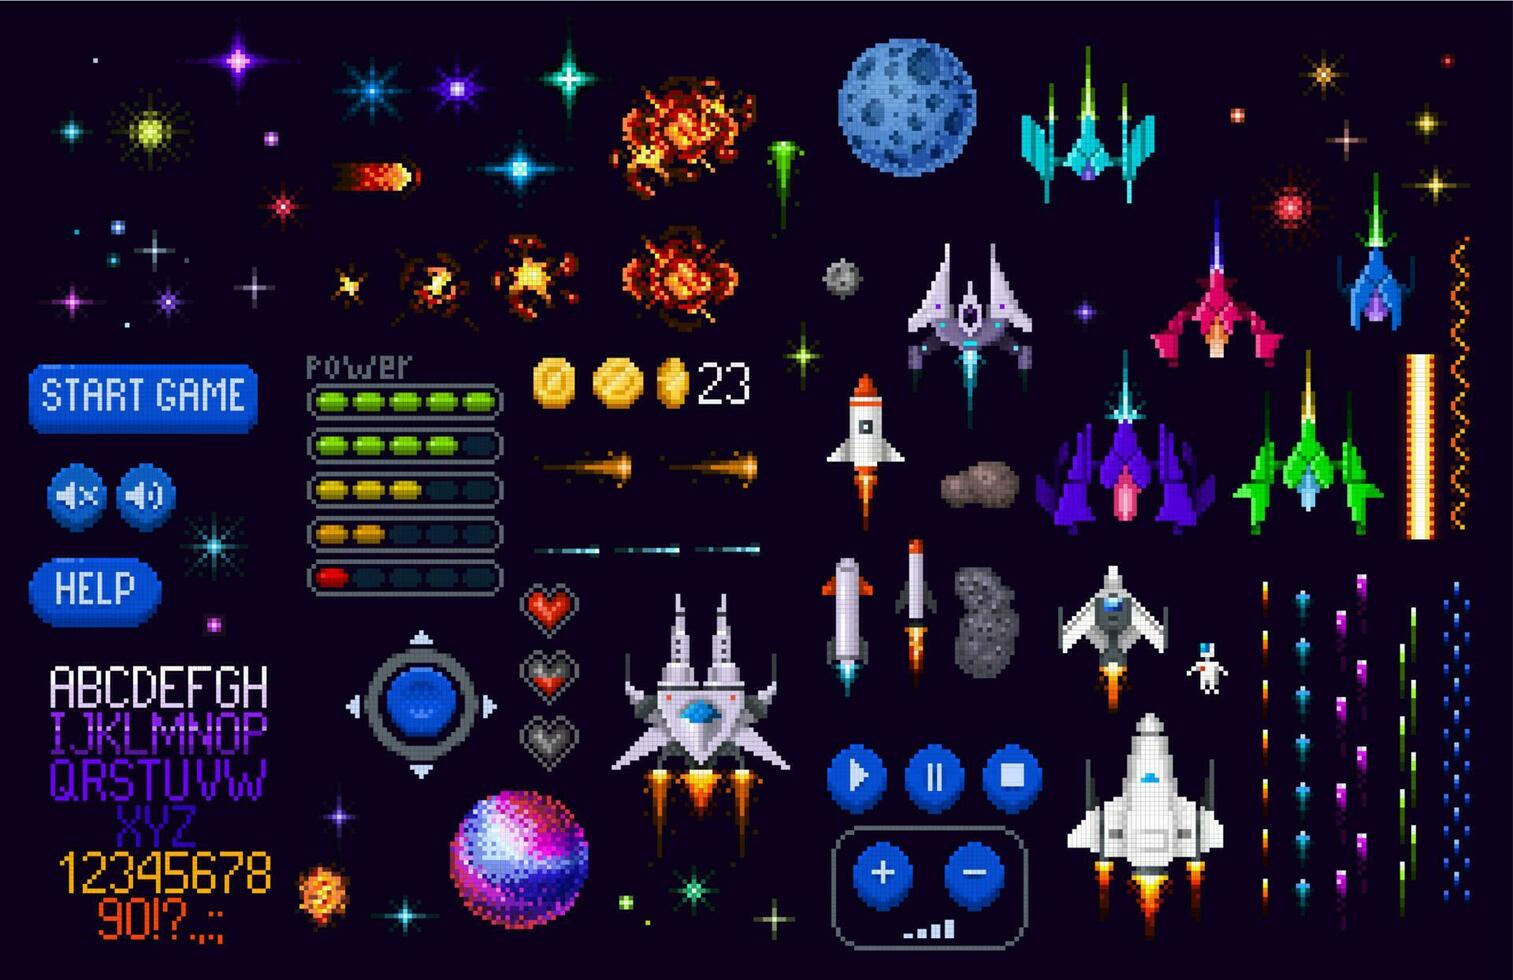 Space game asset 8 bit pixel art, planets, rockets vector